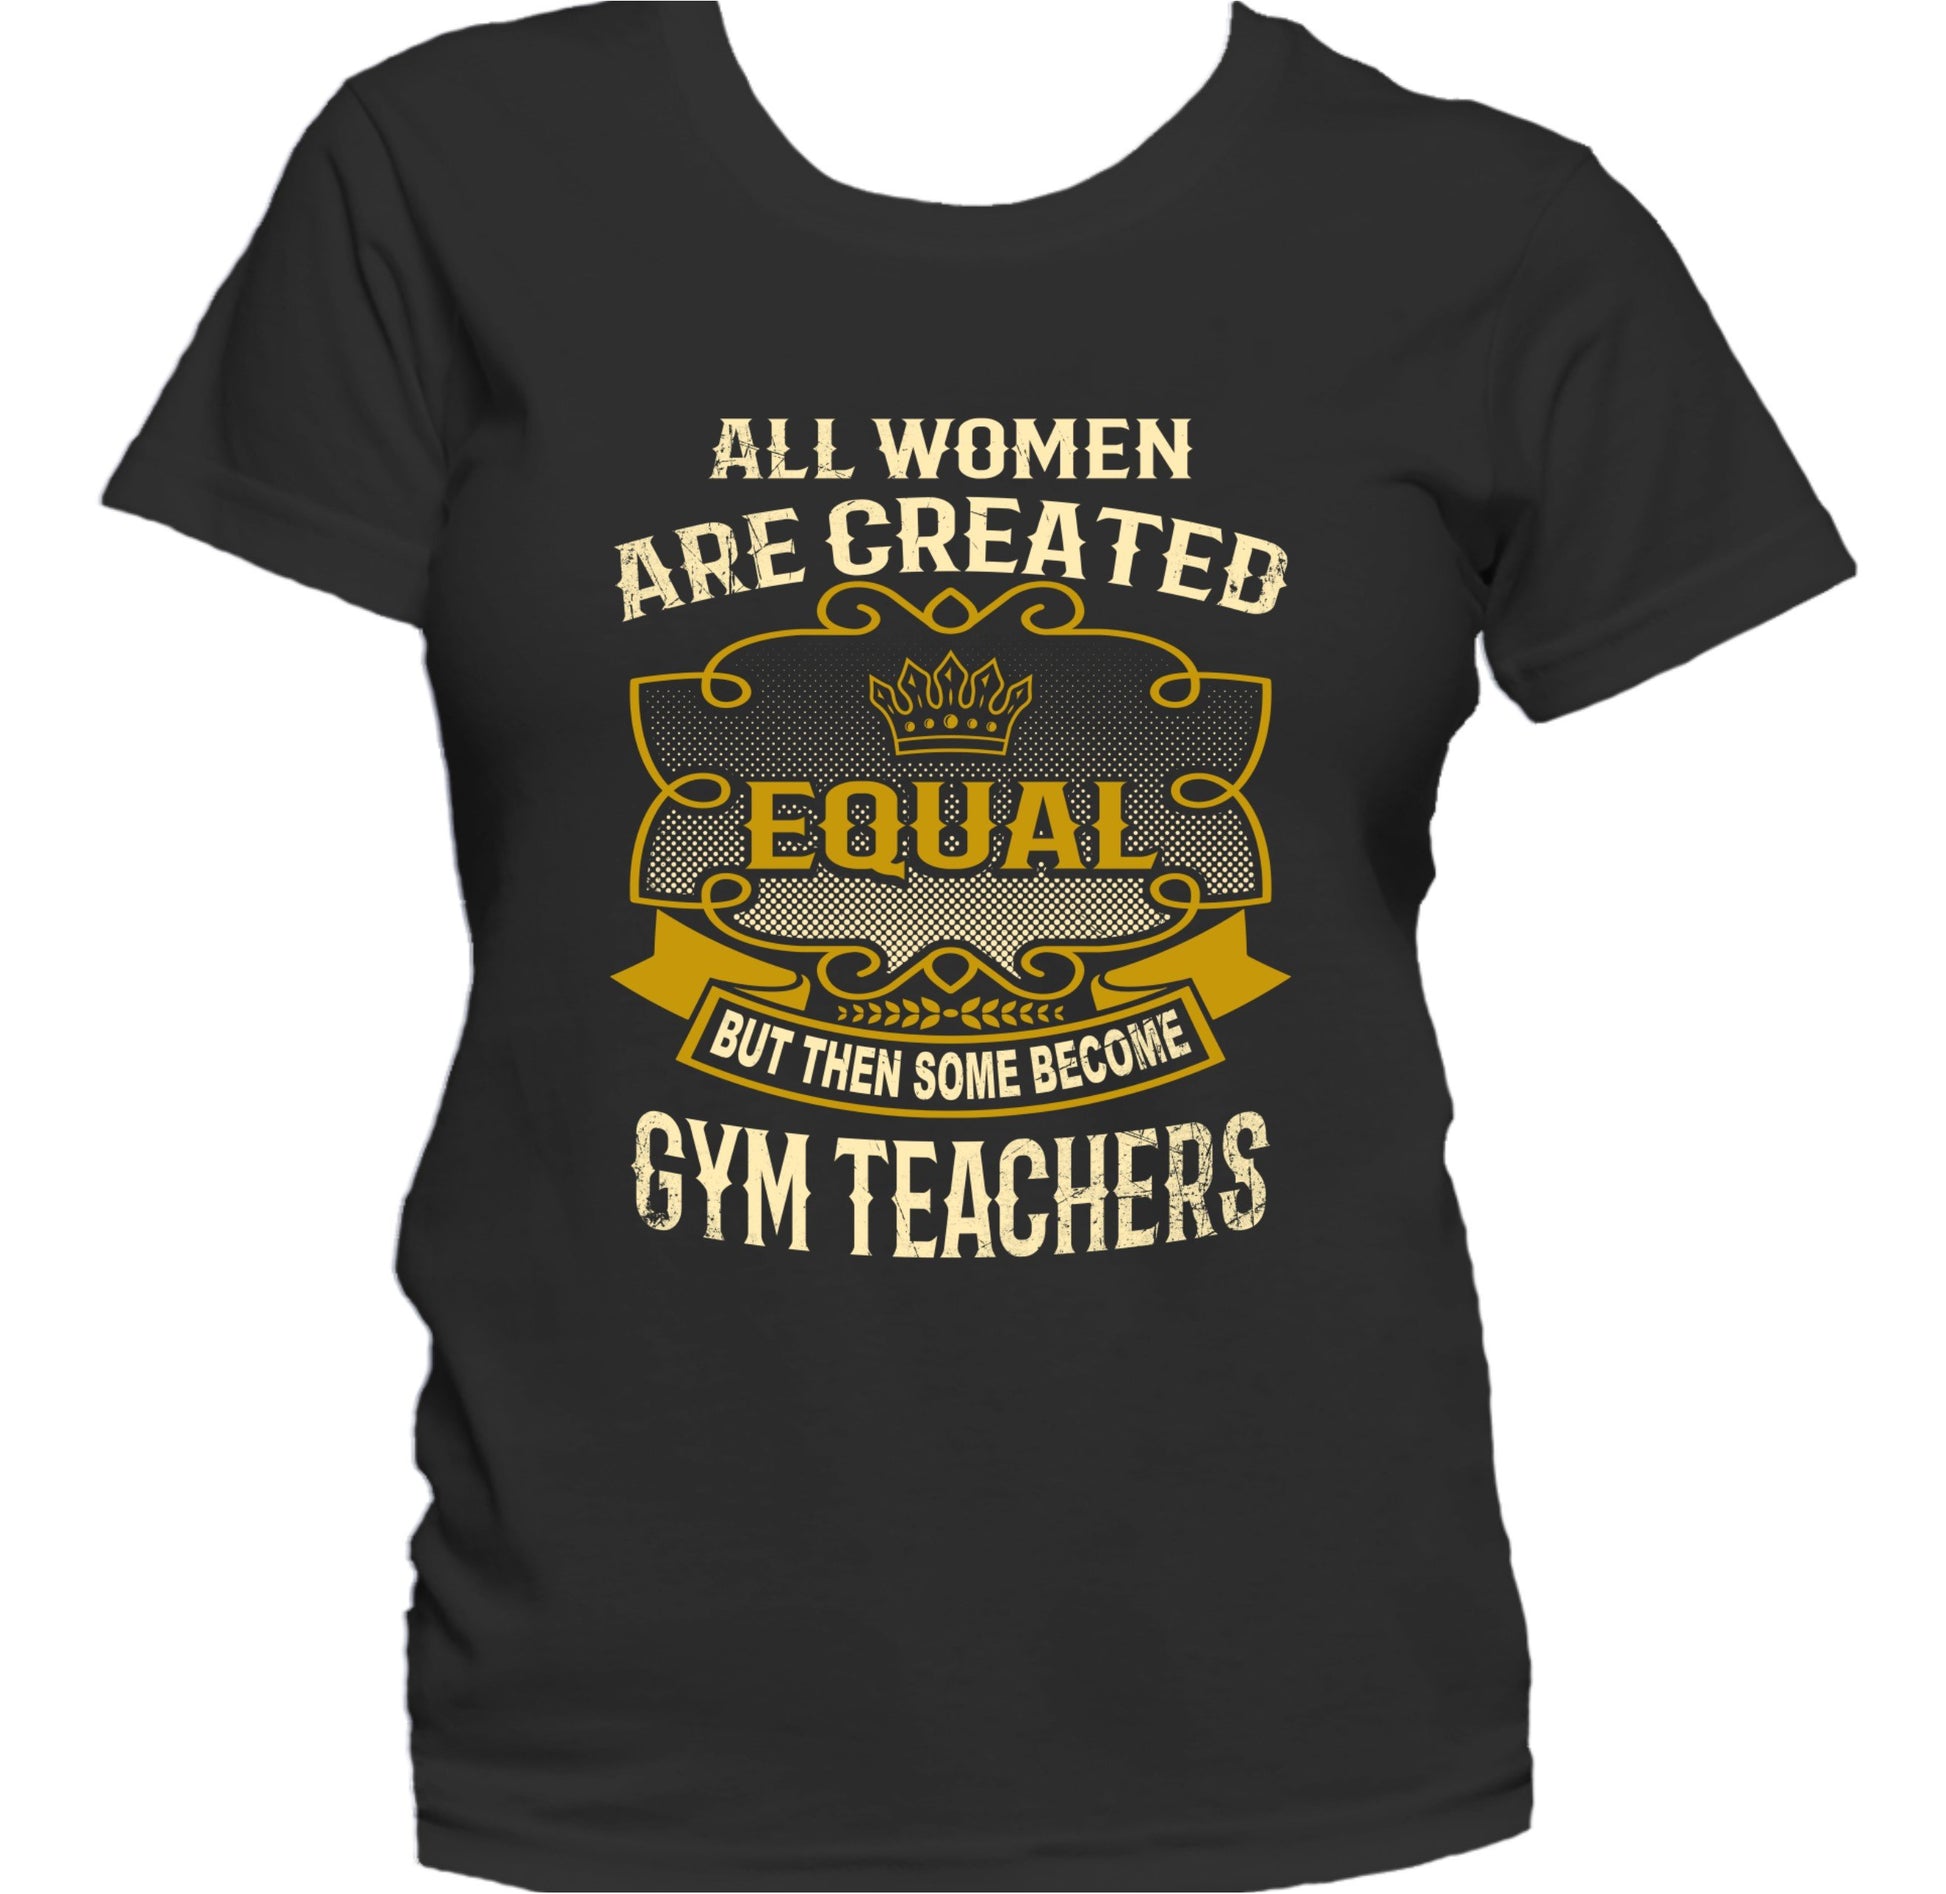 Funny Workout Shirts Gift Idea' Women's T-Shirt